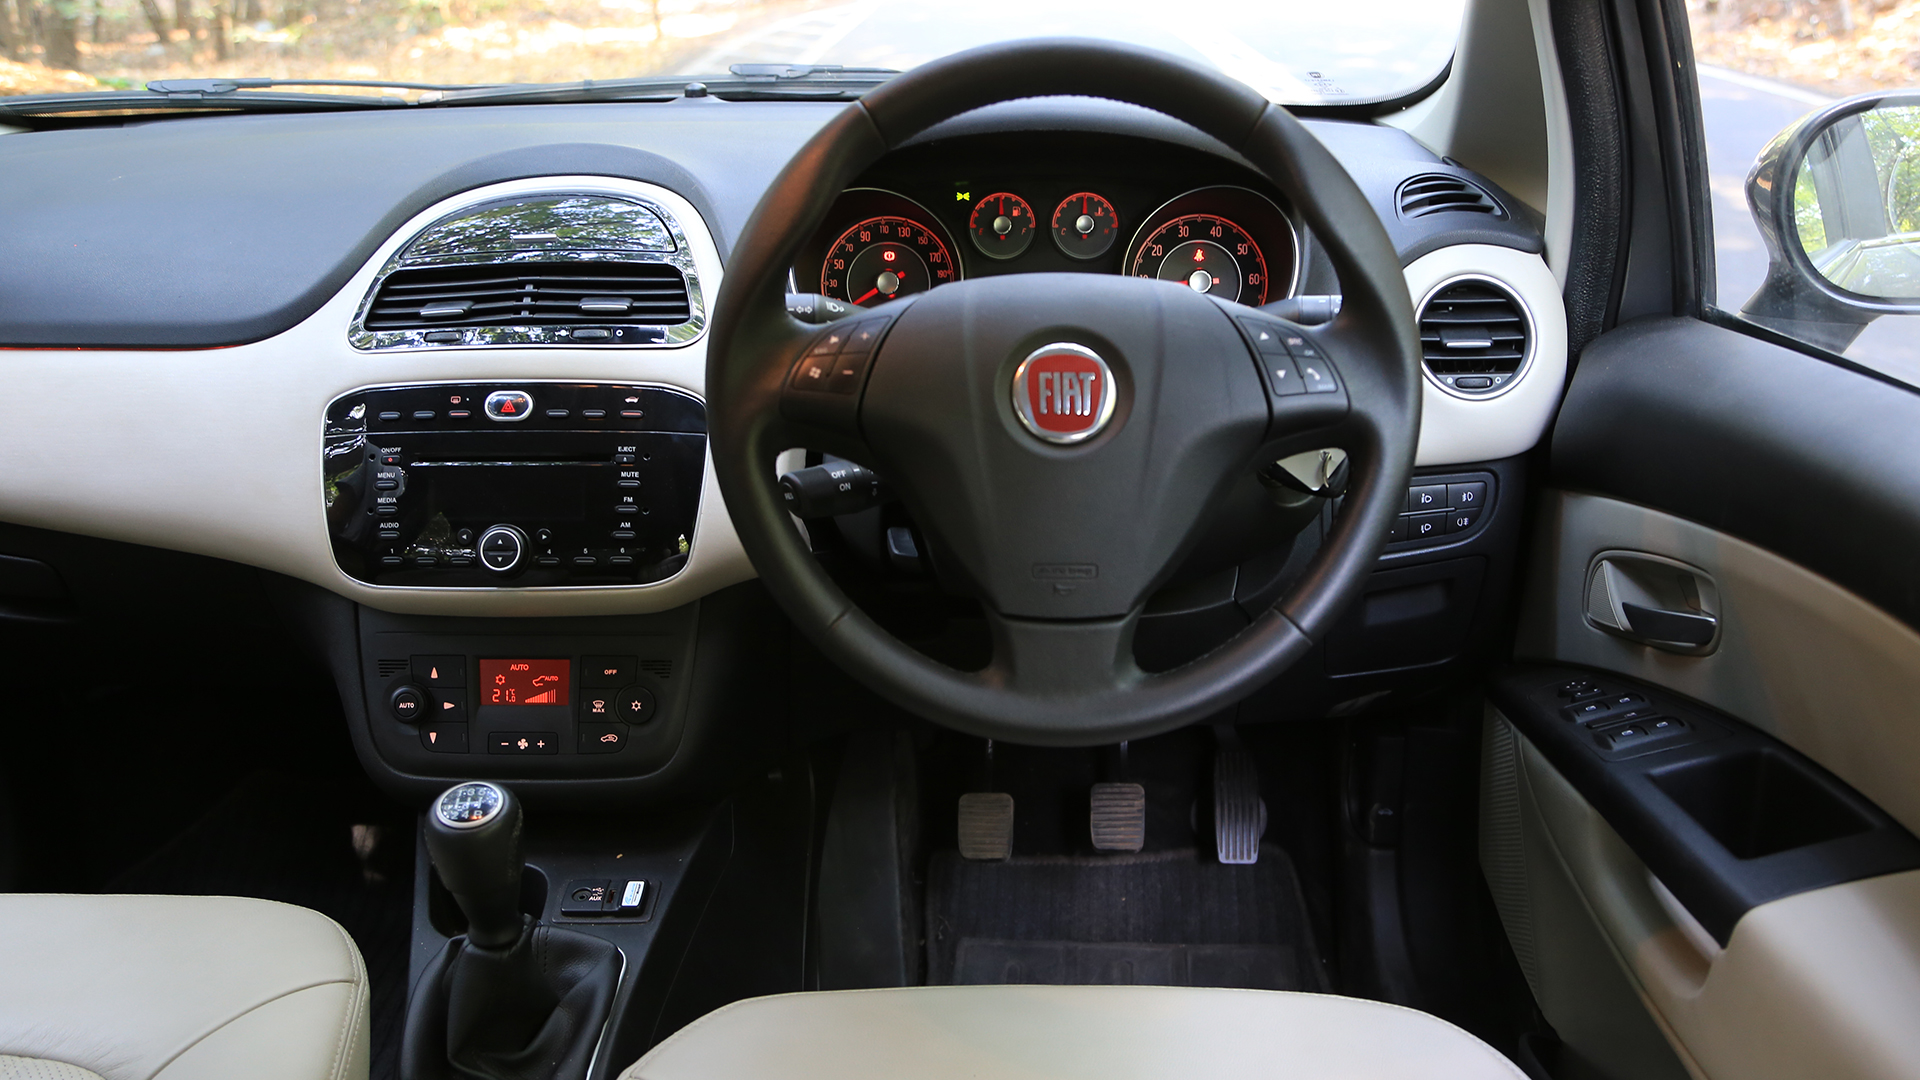 Fiat Linea 2014 Interior Car Photos Overdrive